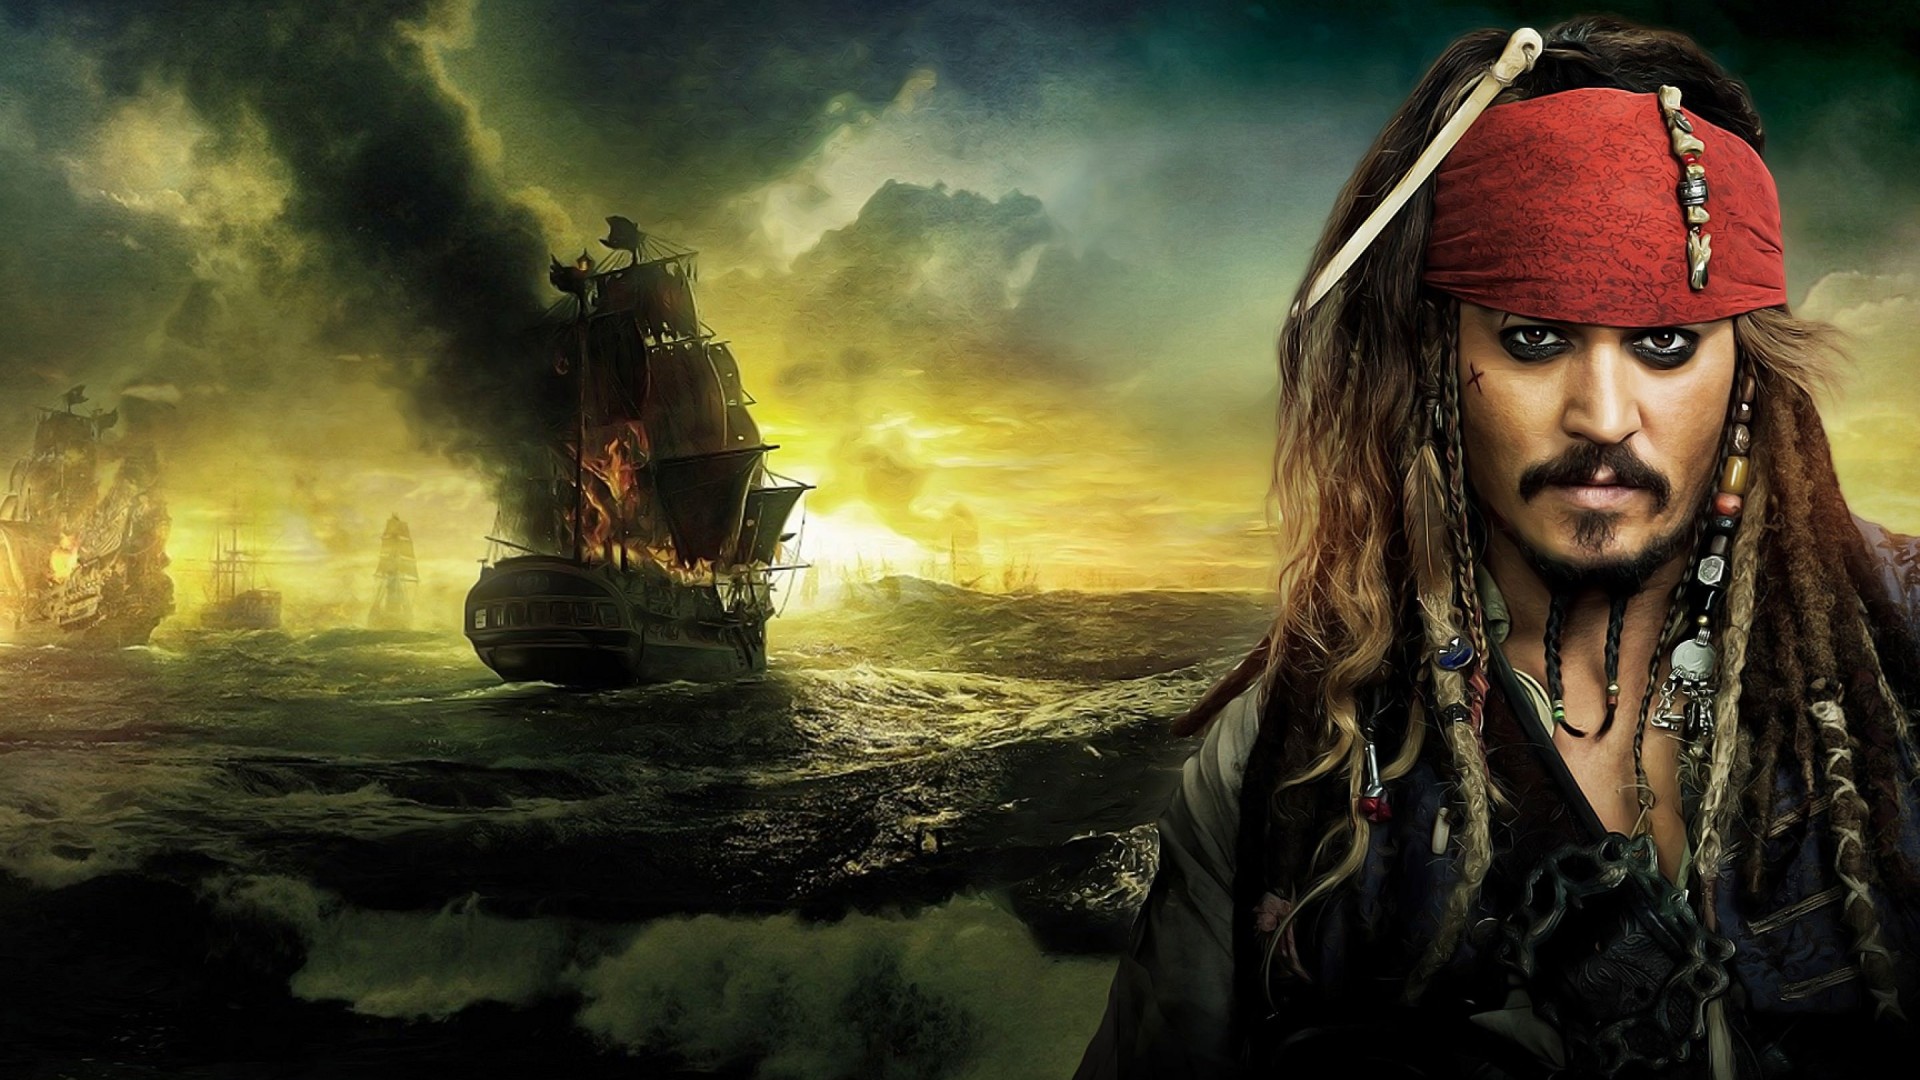 Jack Sparrow - Pirates Of The Caribbean Wallpaper for Desktop 1920x1080